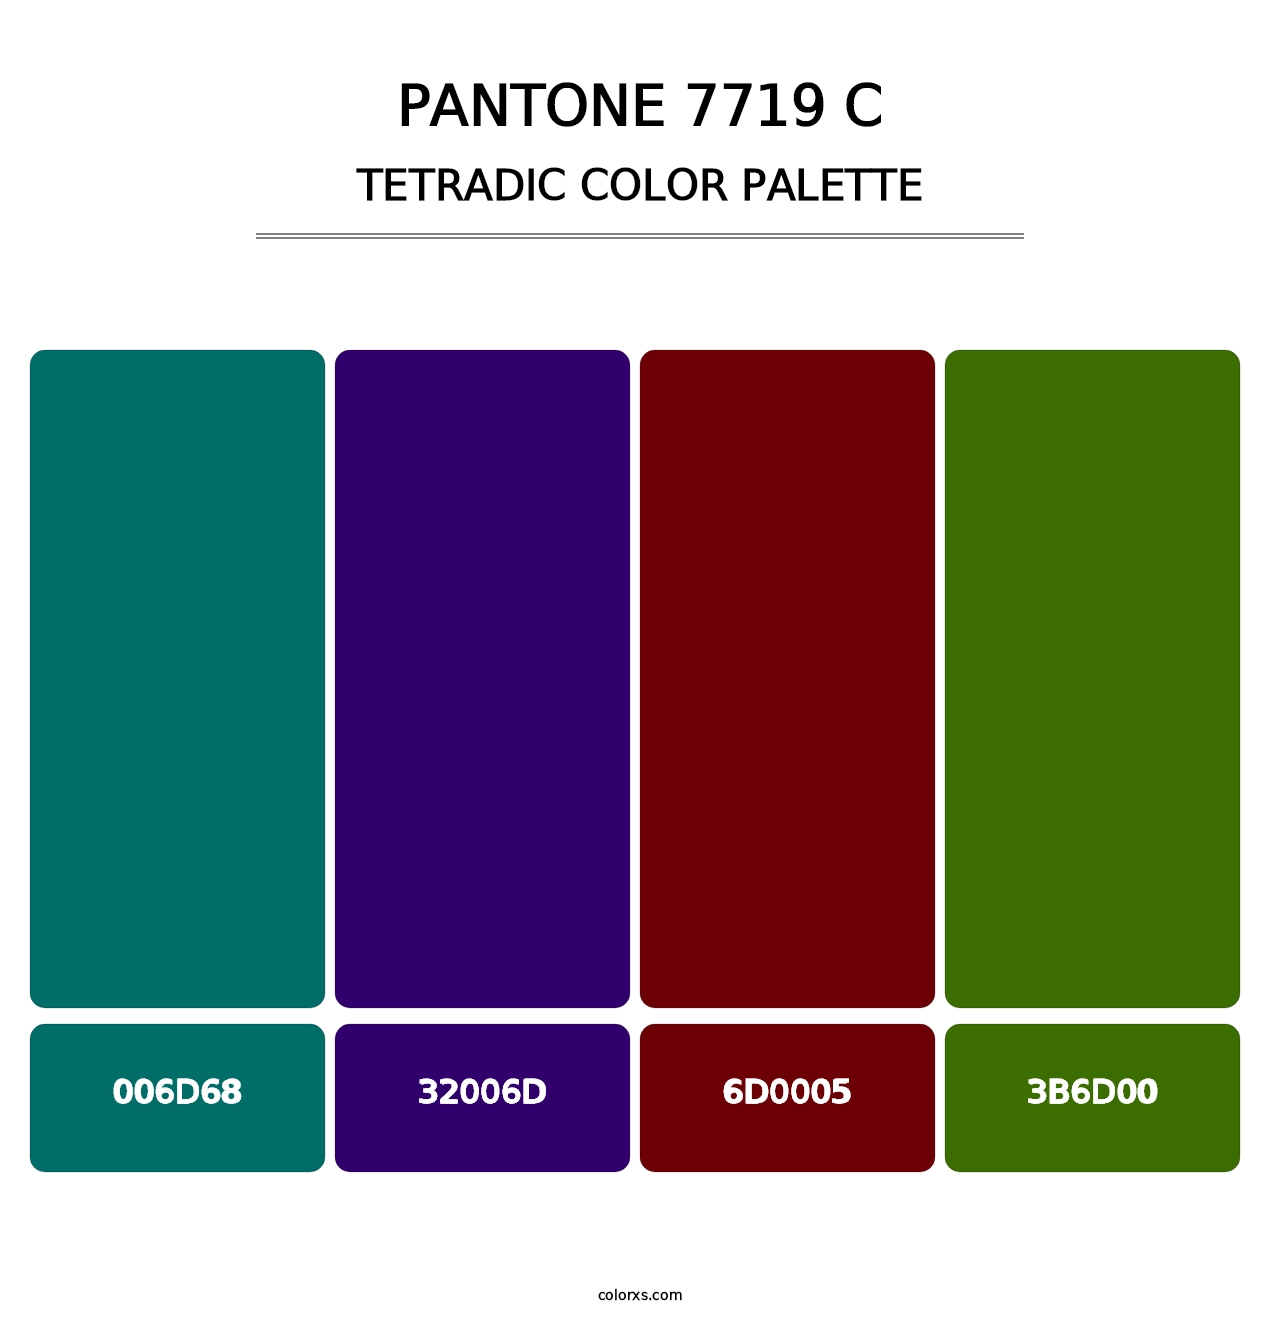 PANTONE 7719 C - Tetradic Color Palette